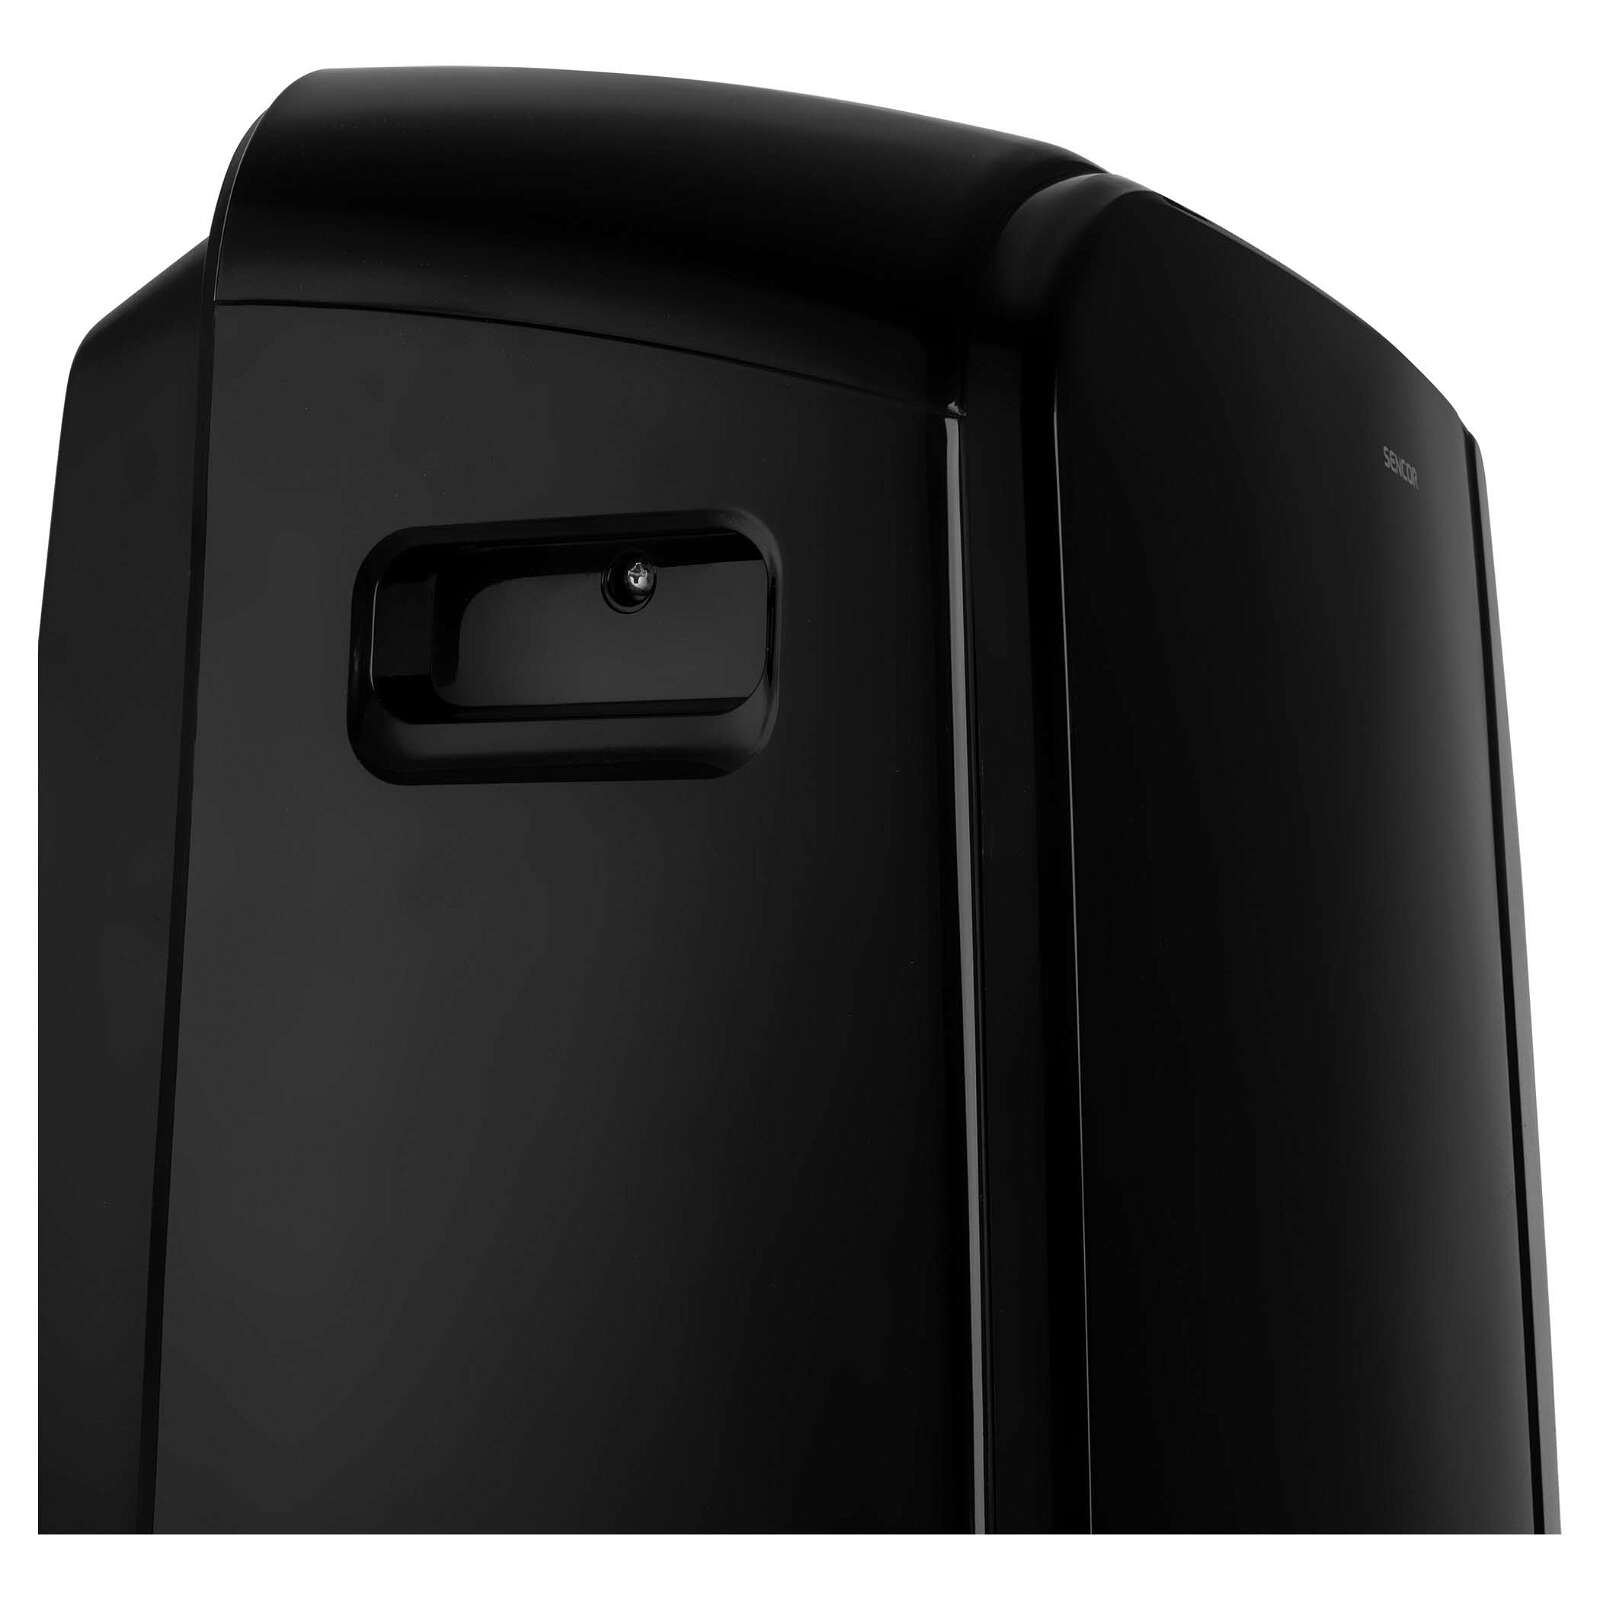 Sencor sac mt1240c wi-fi smart mobil klíma, 3.5 kw, fekete